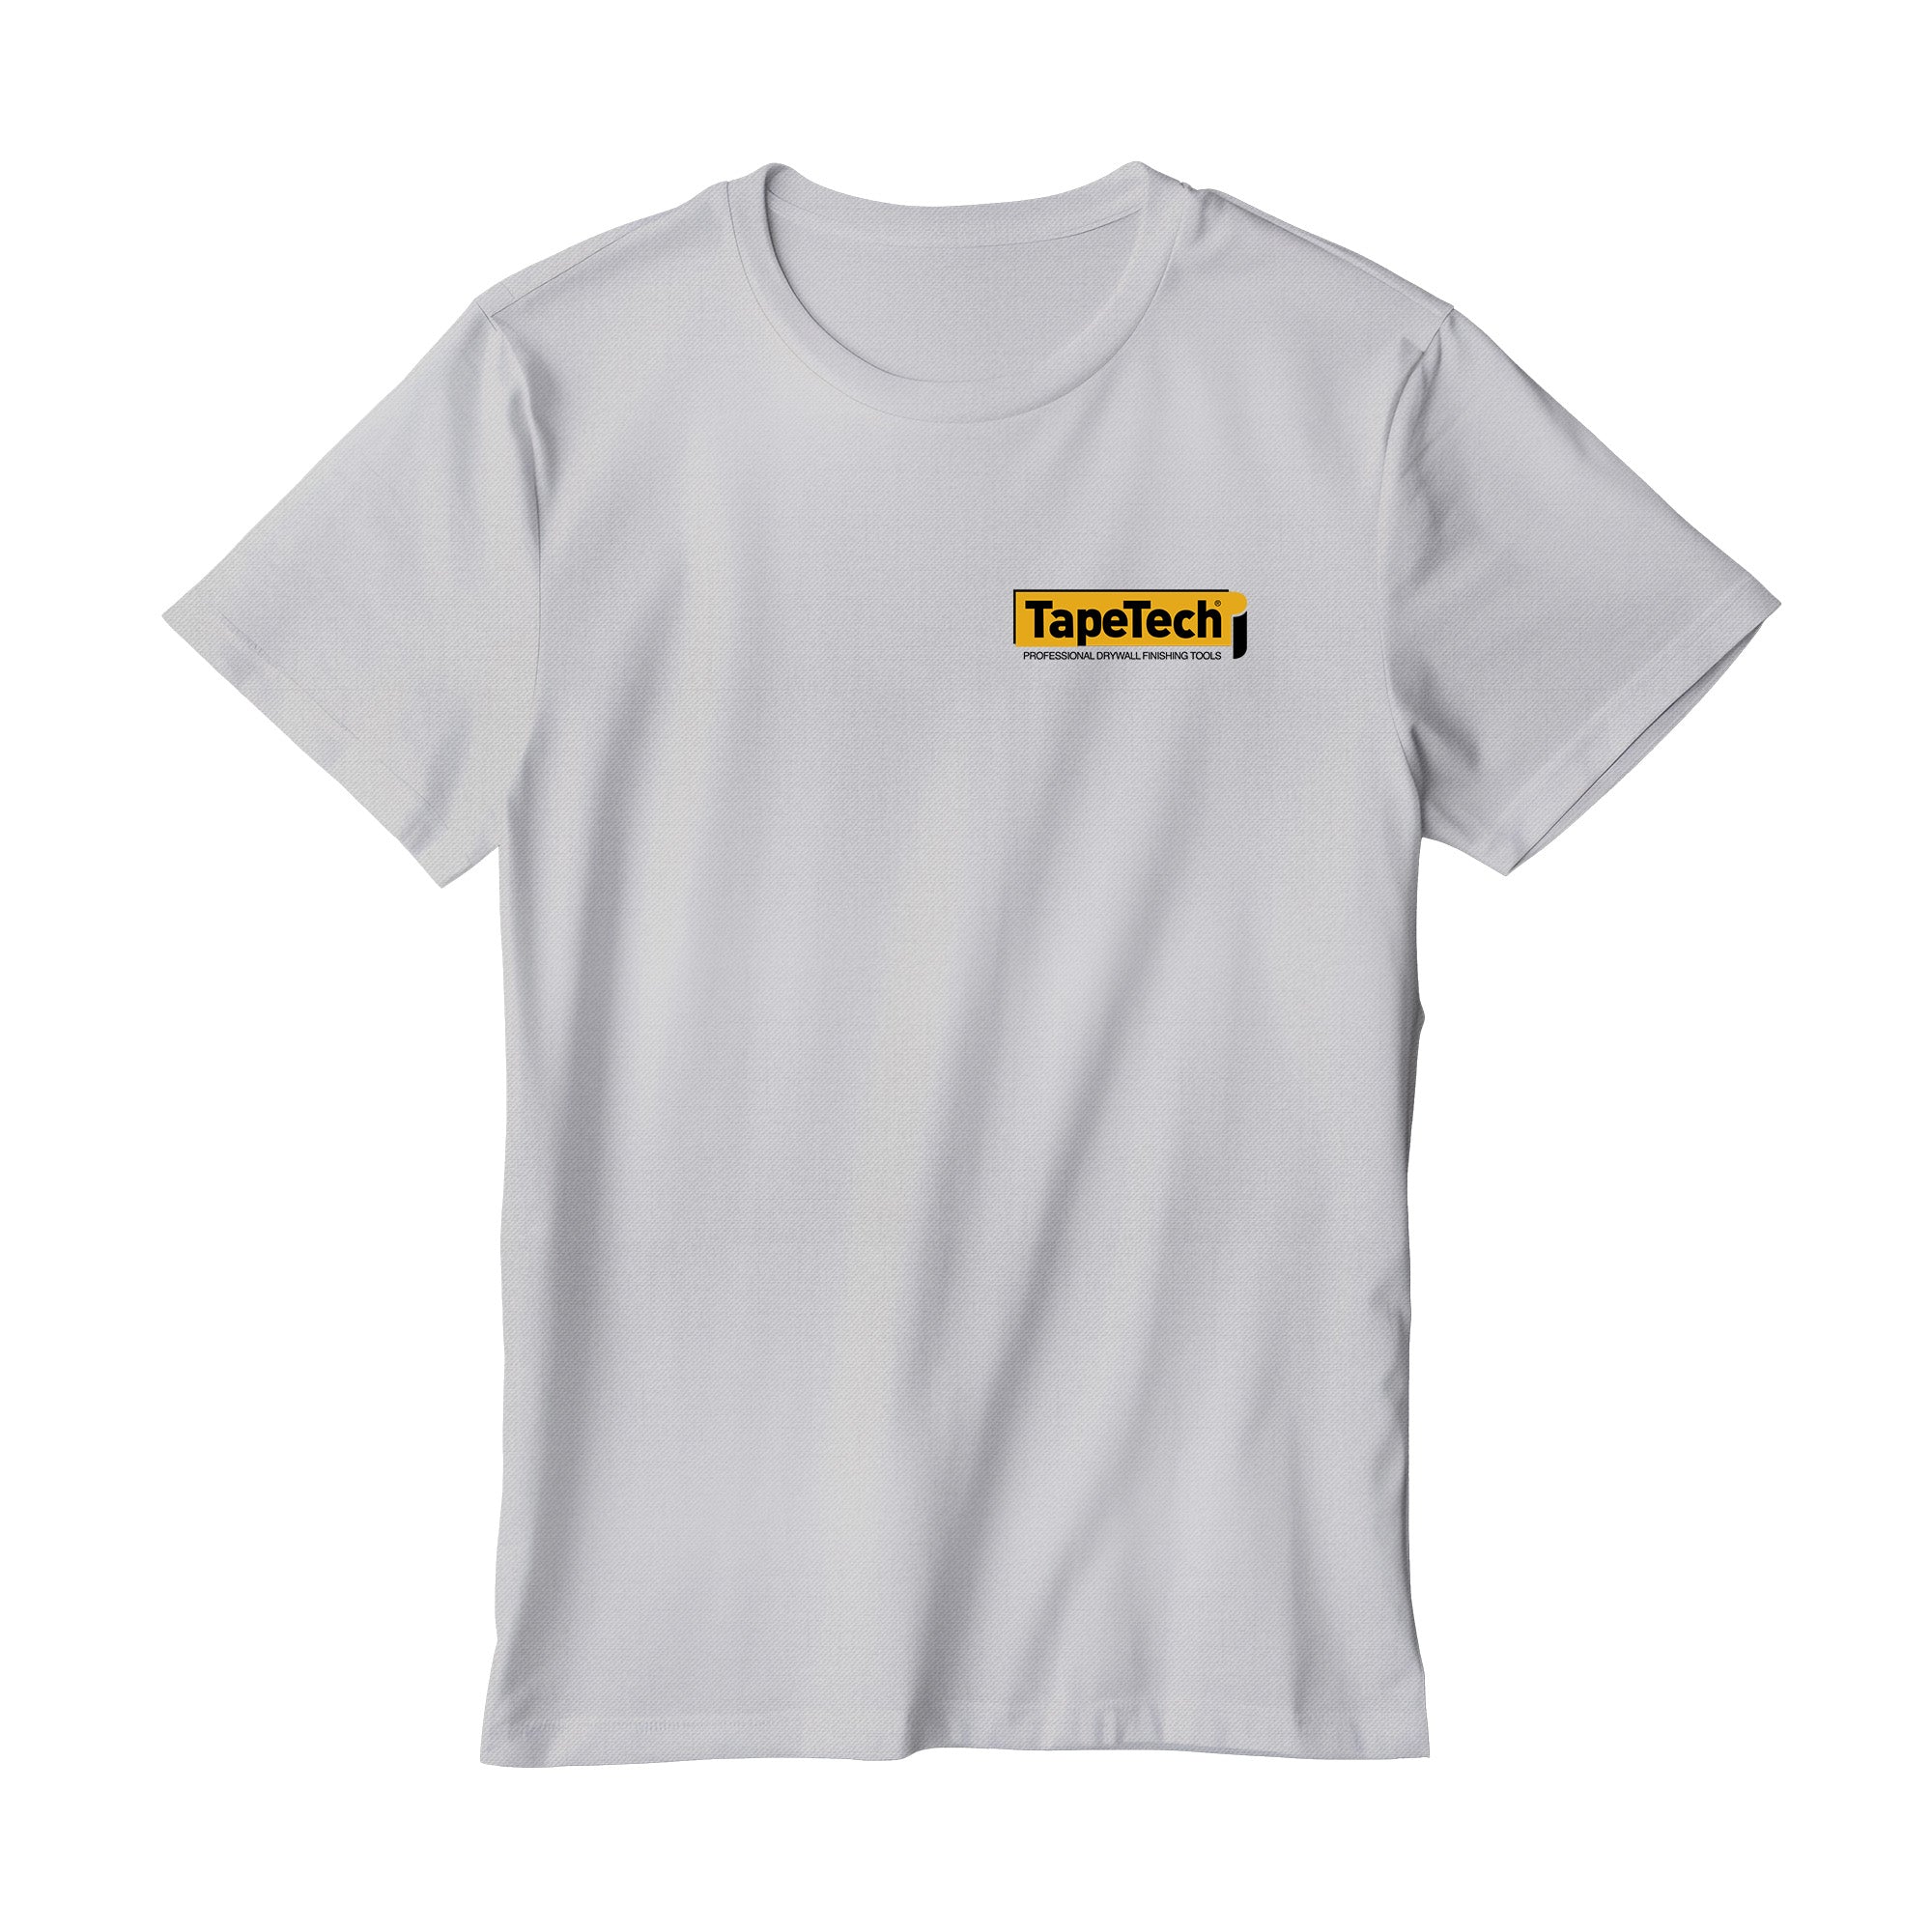 TapeTech Promo T-Shirt